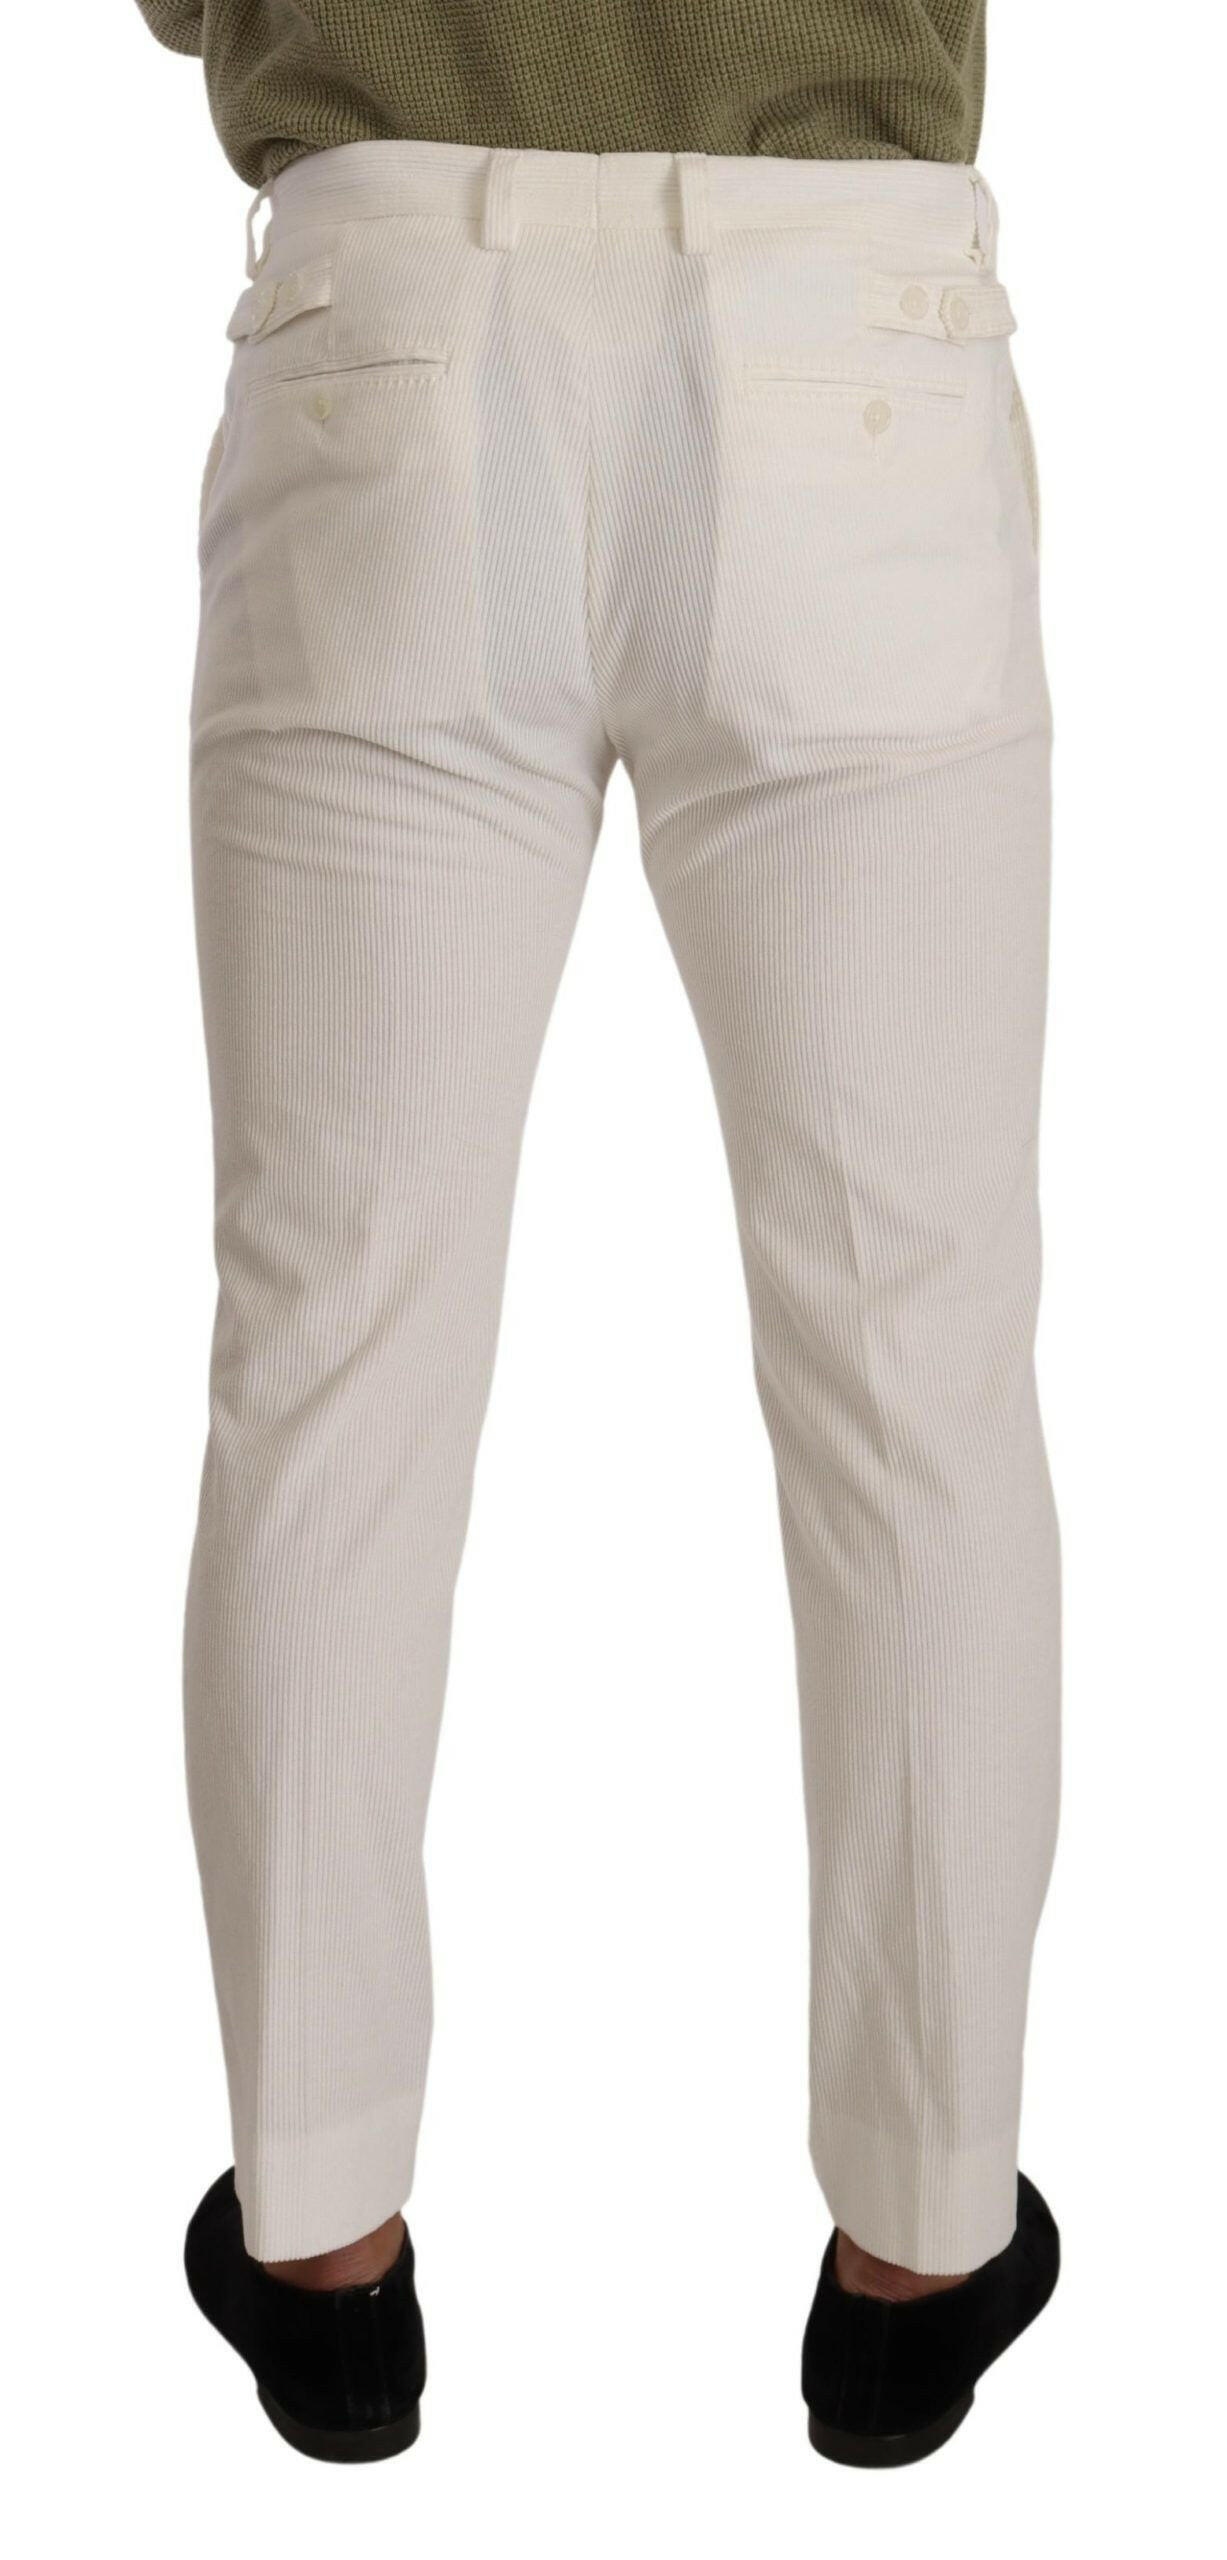 Dolce & Gabbana White Cotton Skinny Corduroy Trouser Pants - GENUINE AUTHENTIC BRAND LLC  